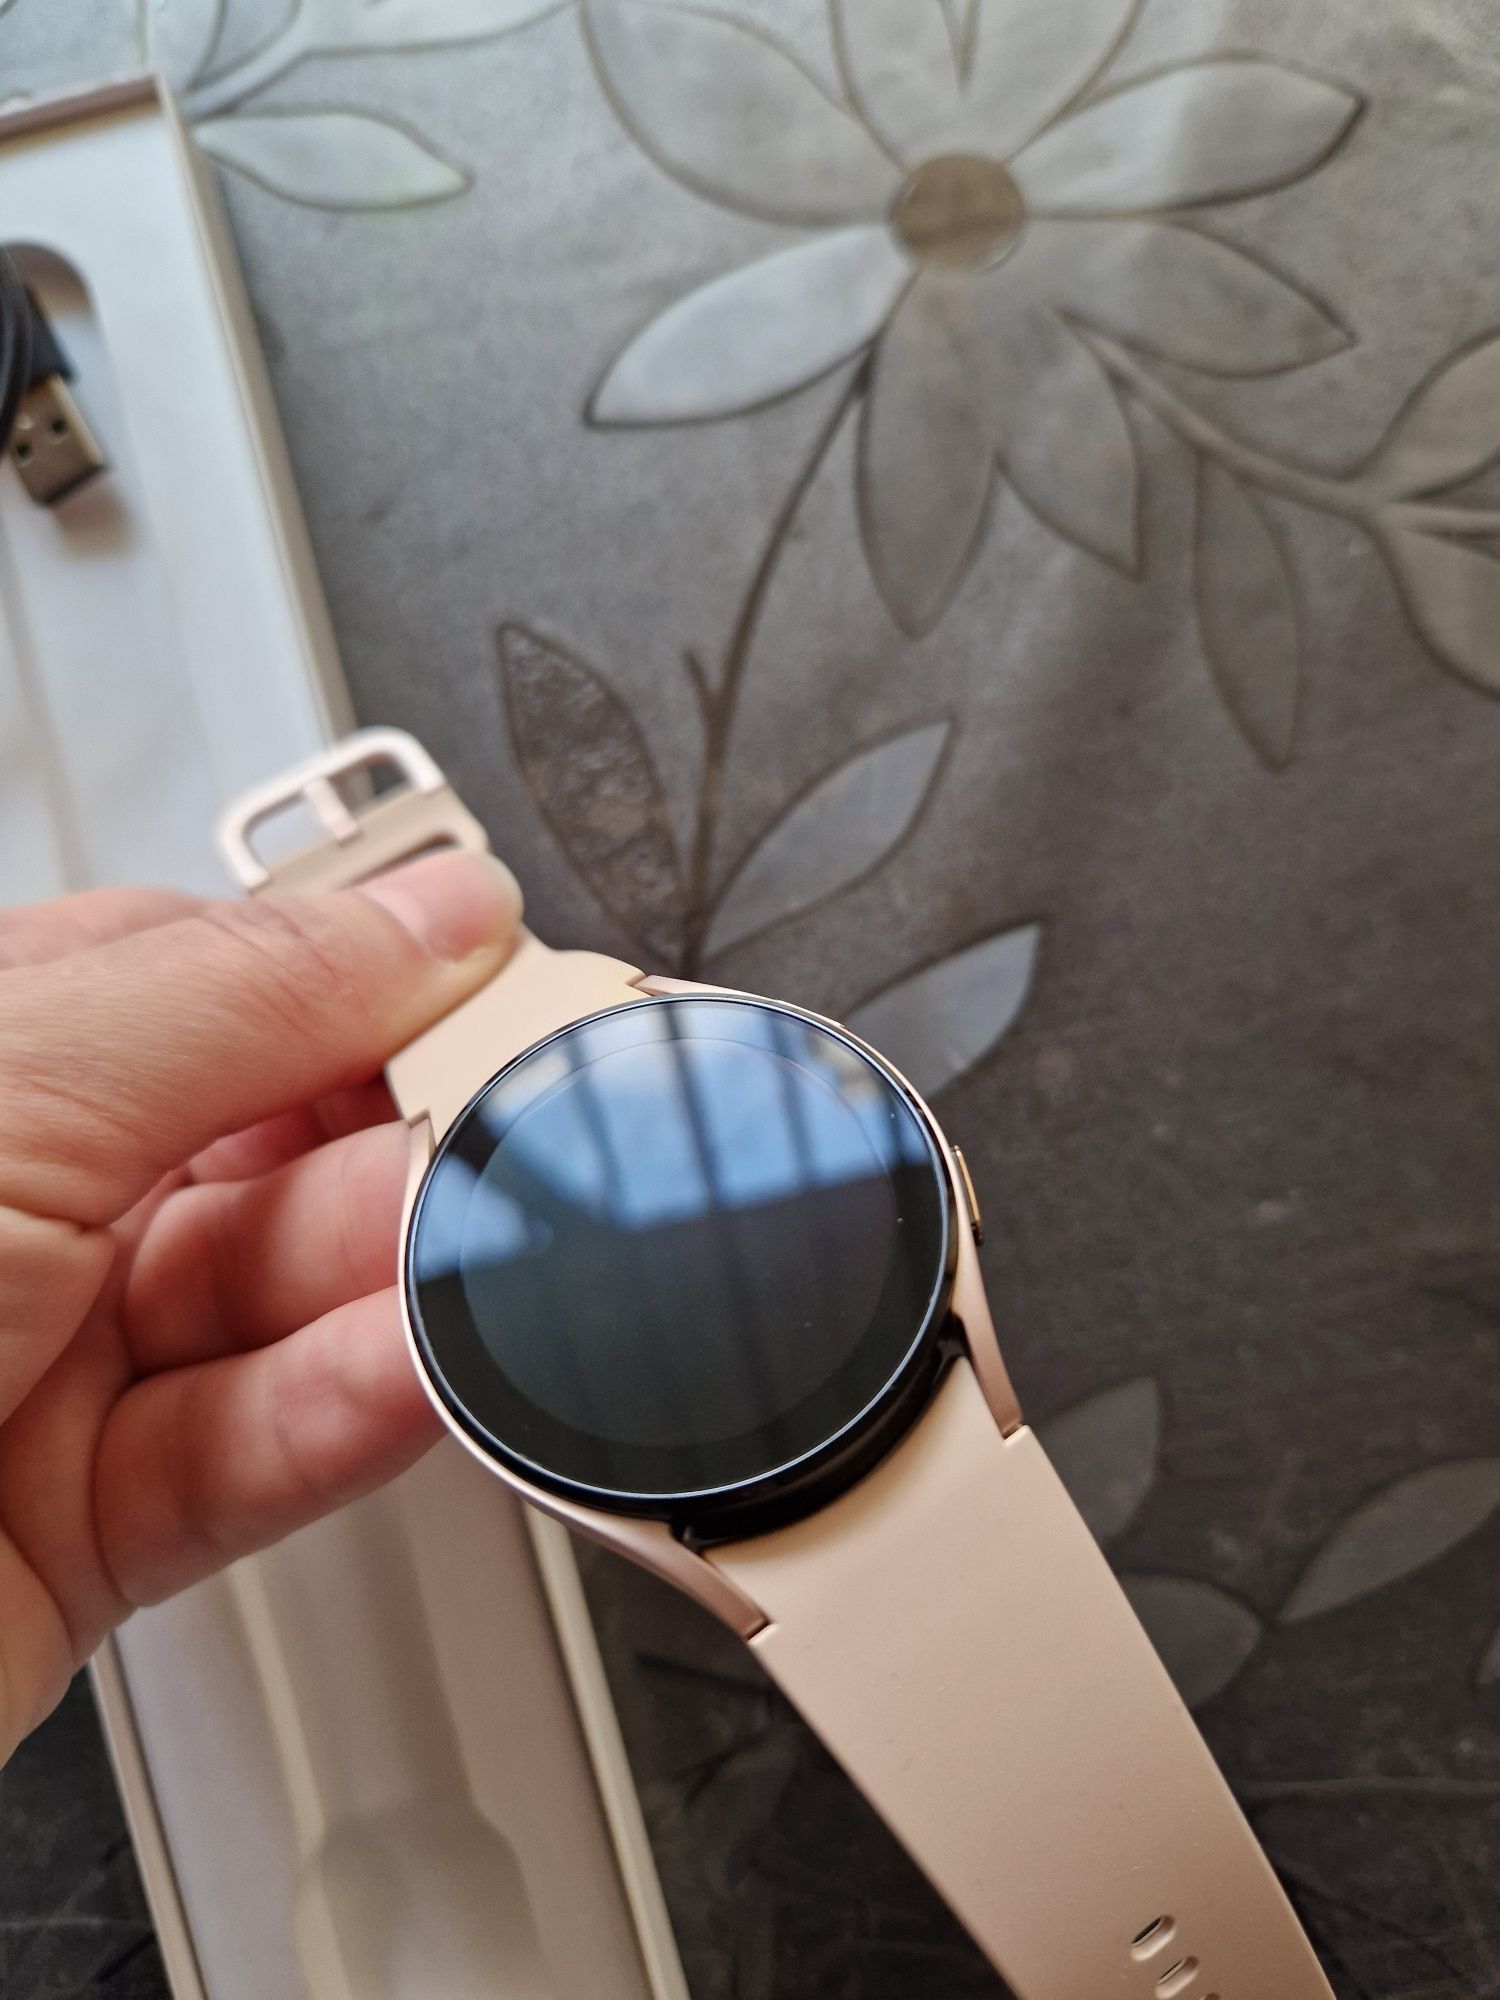 Смарт часовник Samsung Galaxy Watch 4